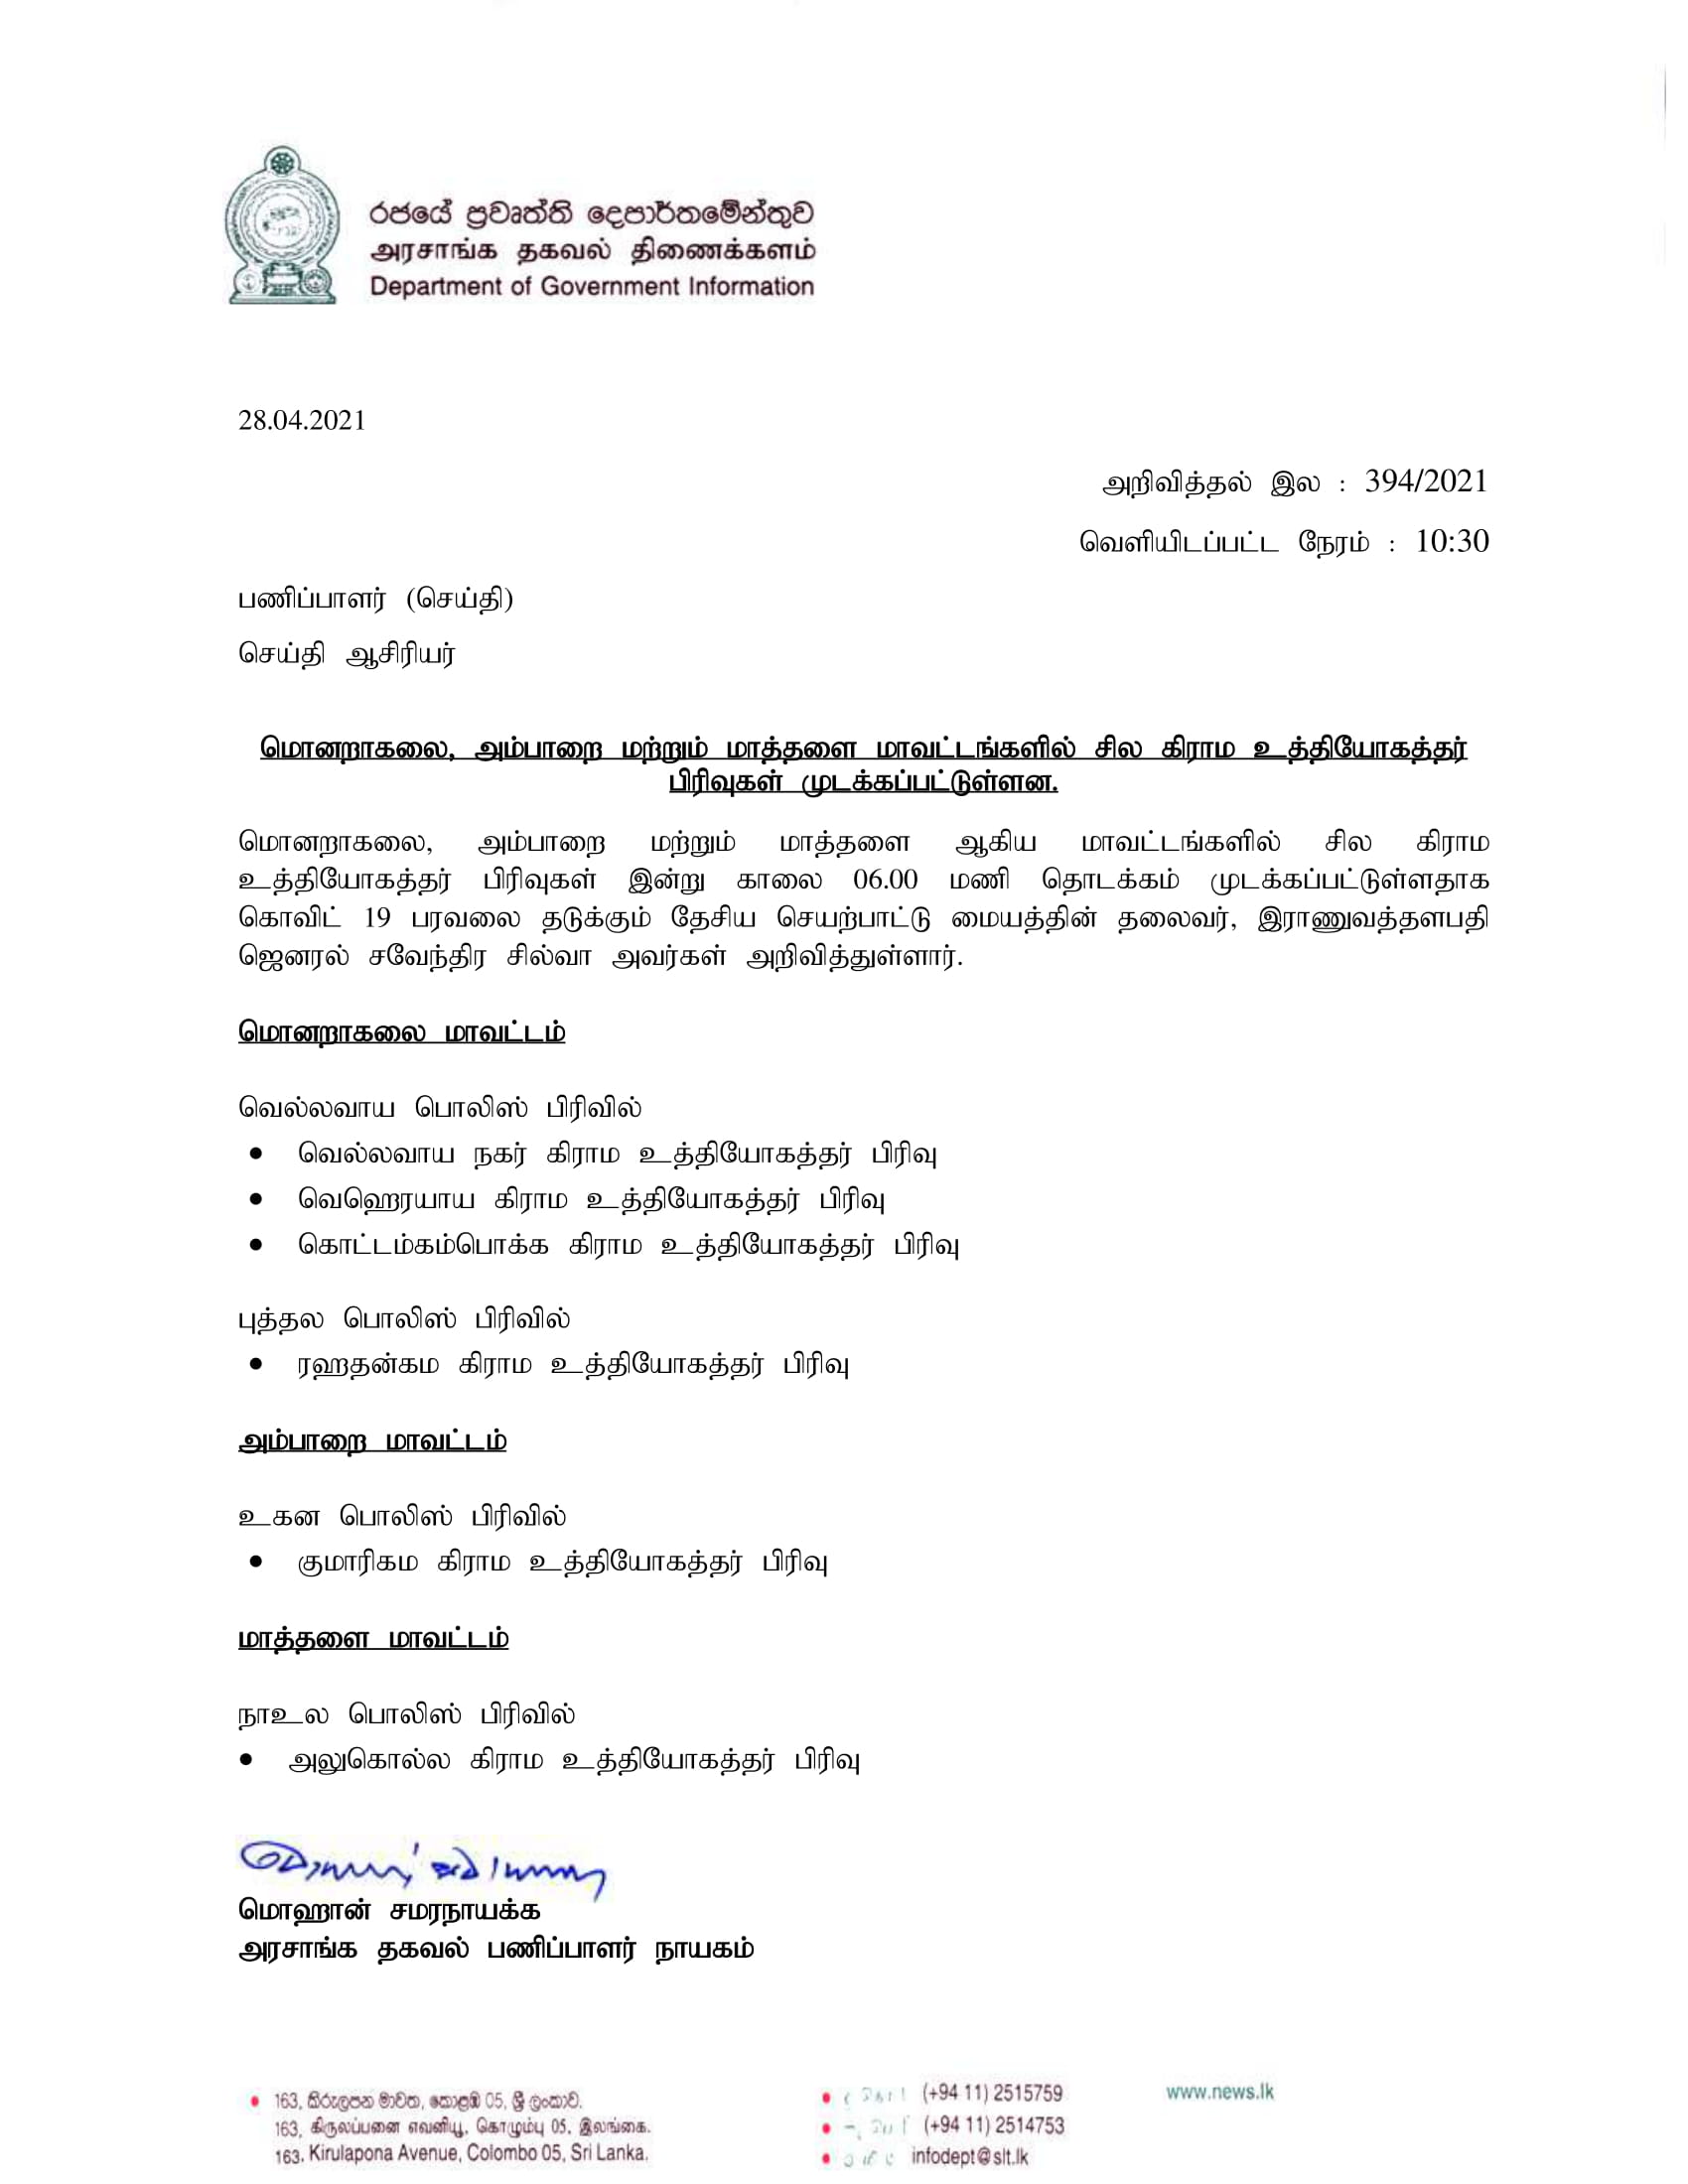 Press Release 394 tamil 1